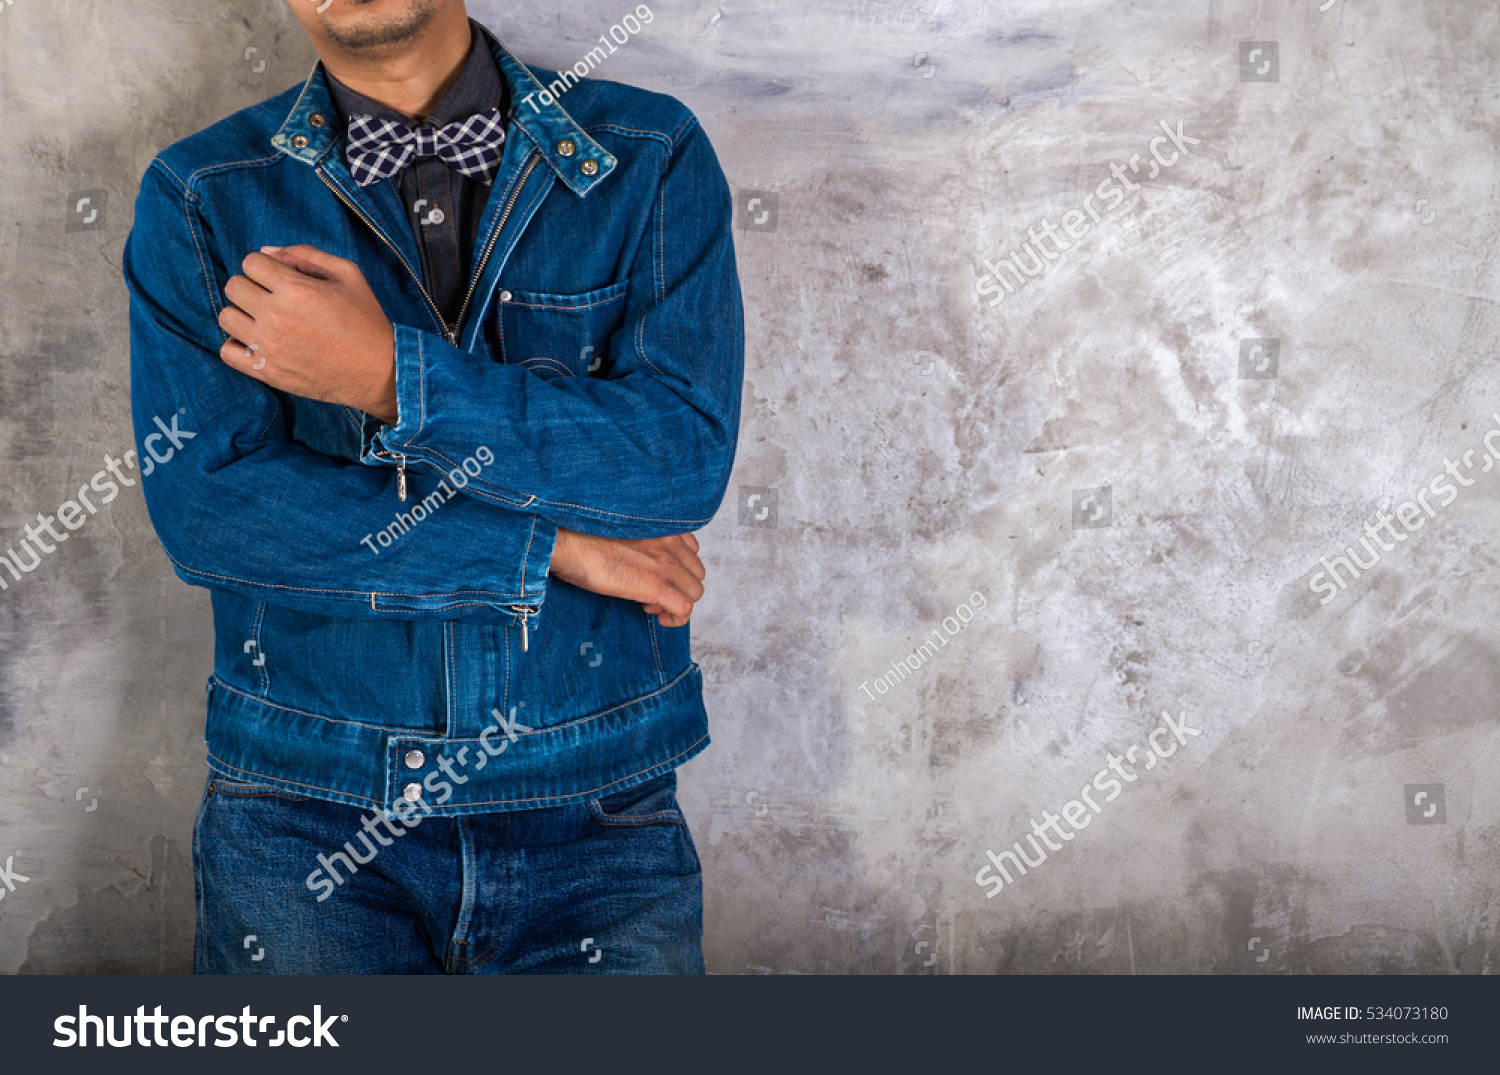 blue jean man